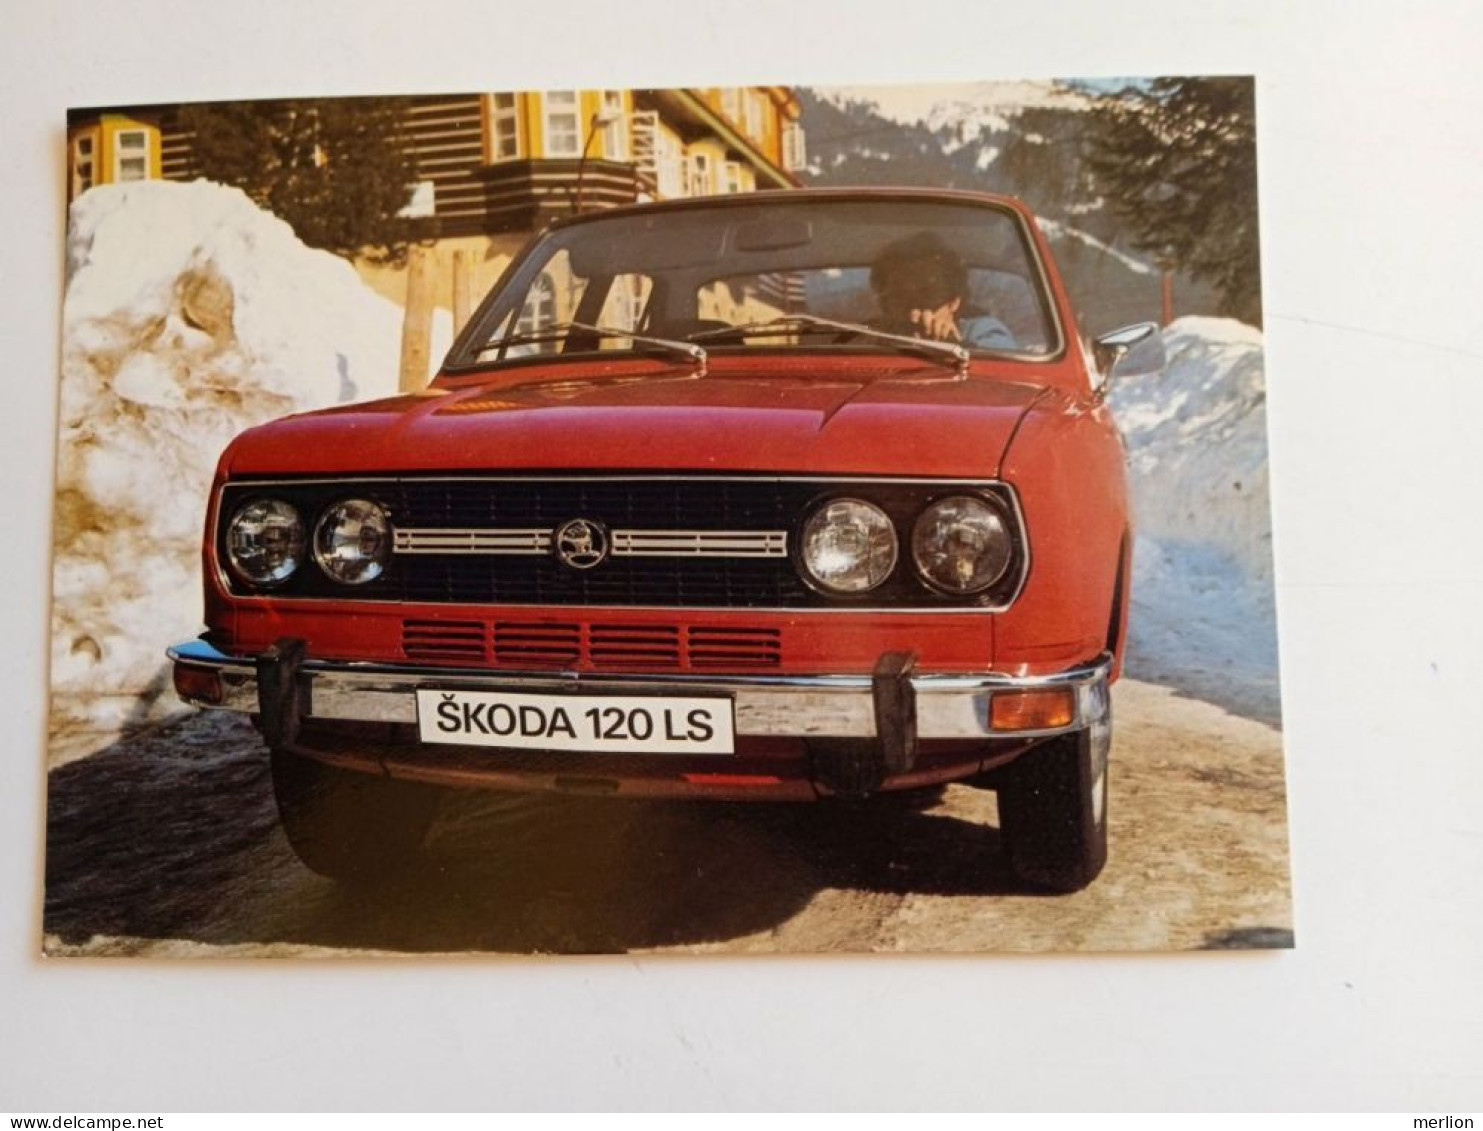 D202853  SKODA   120 LS   - Automobile  - Car - Voiture   CSSR -Czechia  Ca 1970-80  Motokov Praha  Czechoslovakia - Voitures De Tourisme